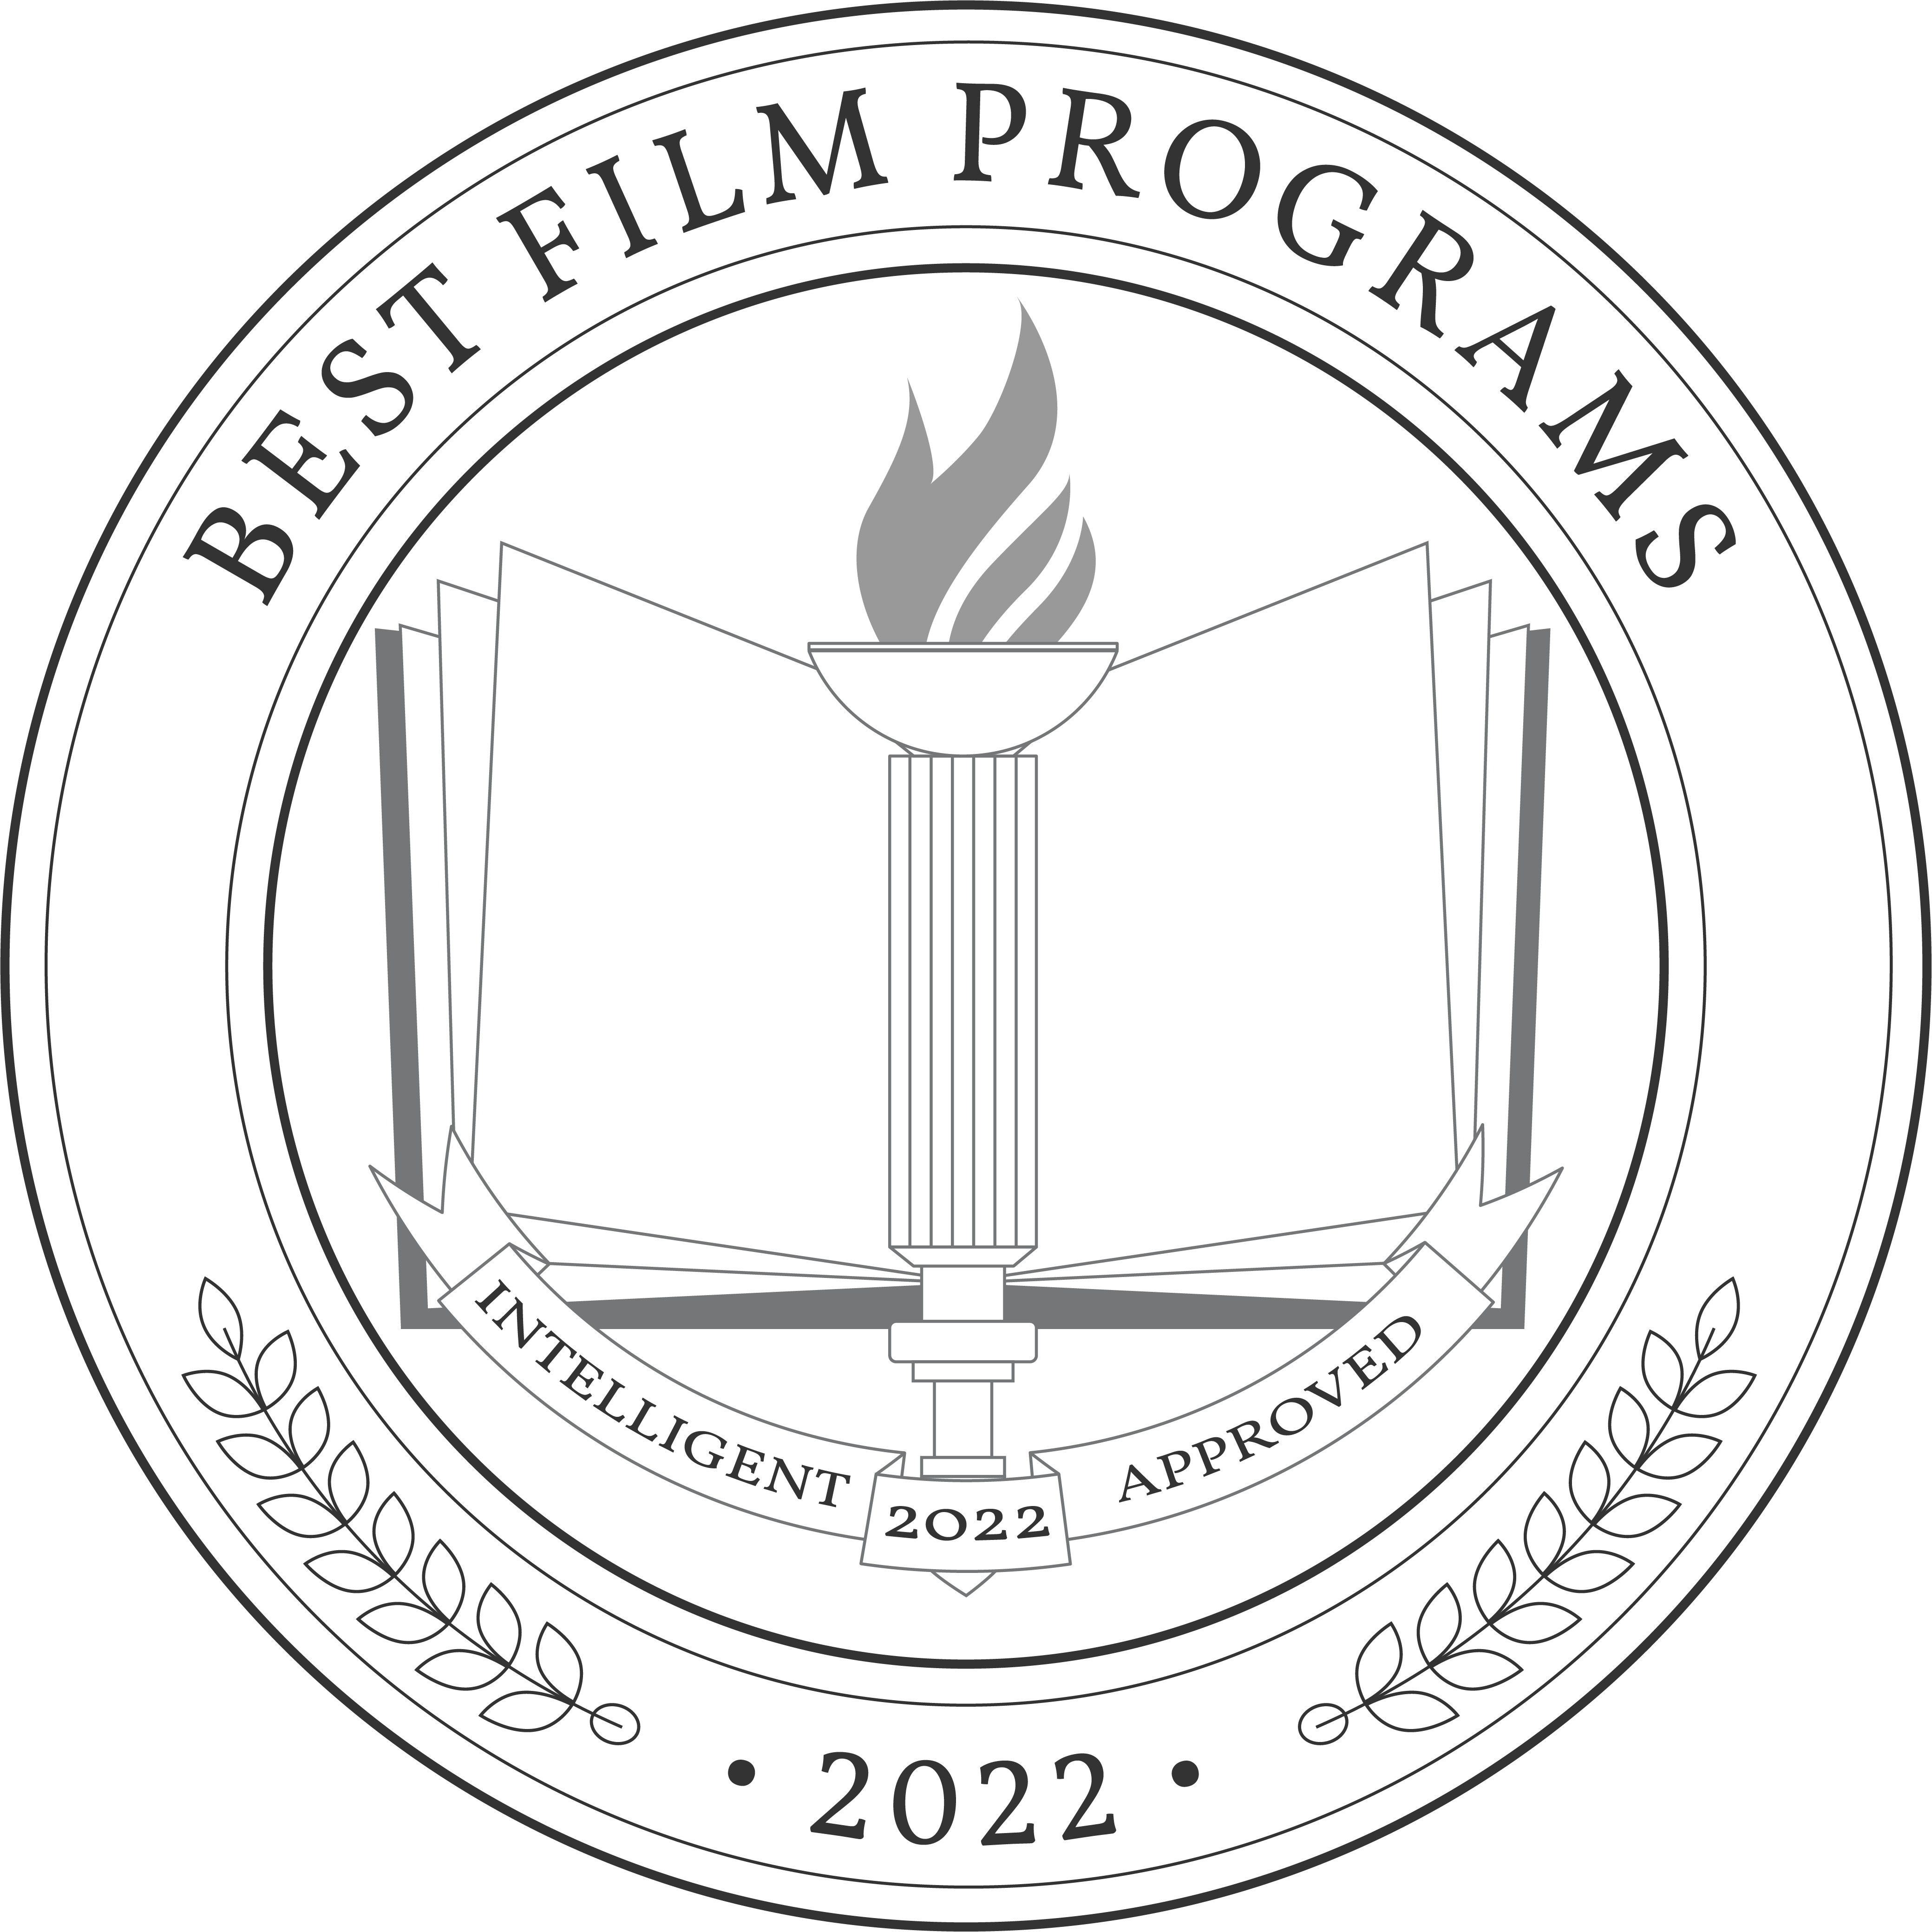 Best-Film-Programs-Badge.png